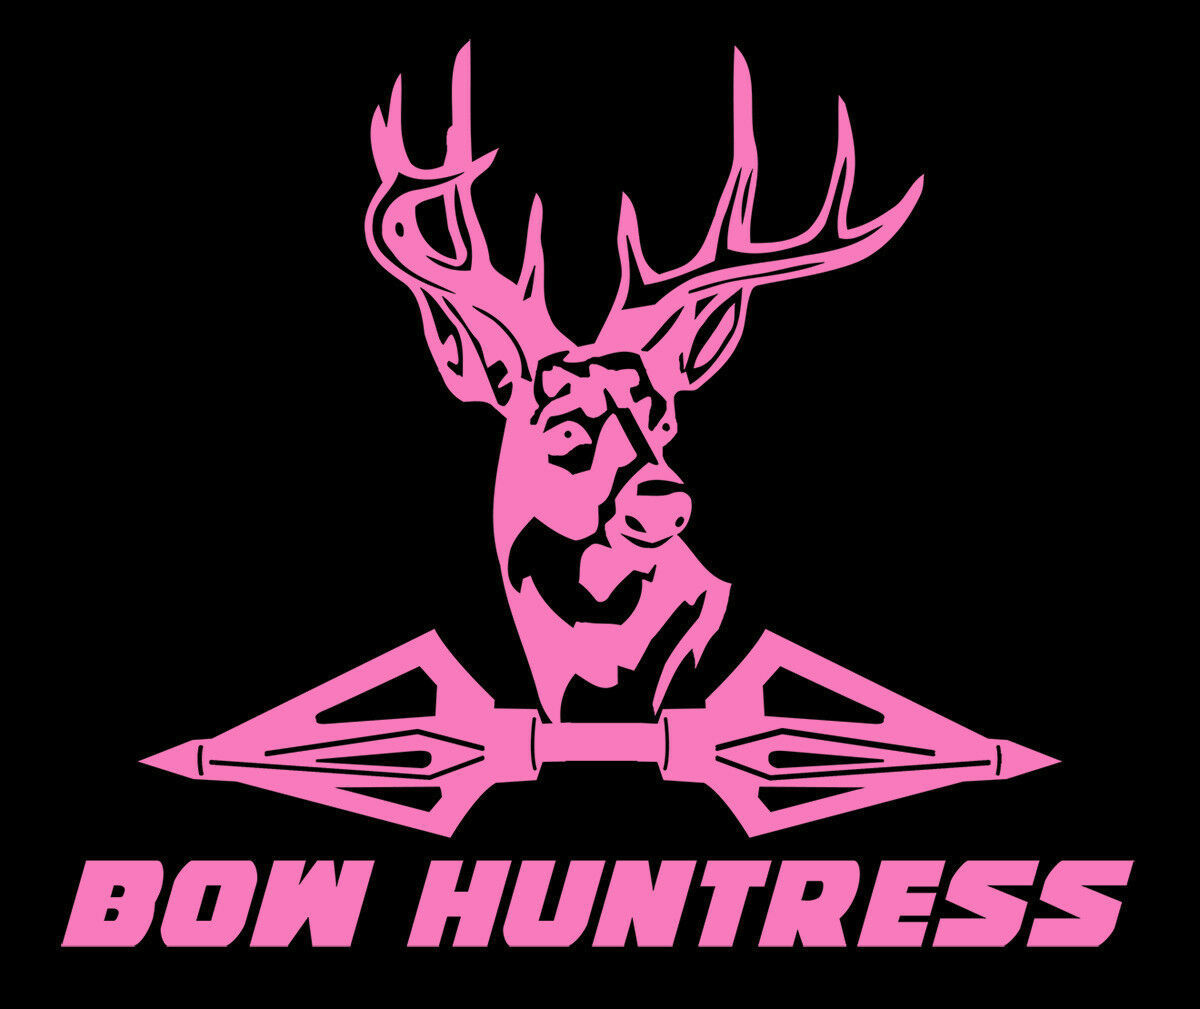 Bow Huntress Decal, window sticker,Women's bowhunting,Buck deer,antlers,bear